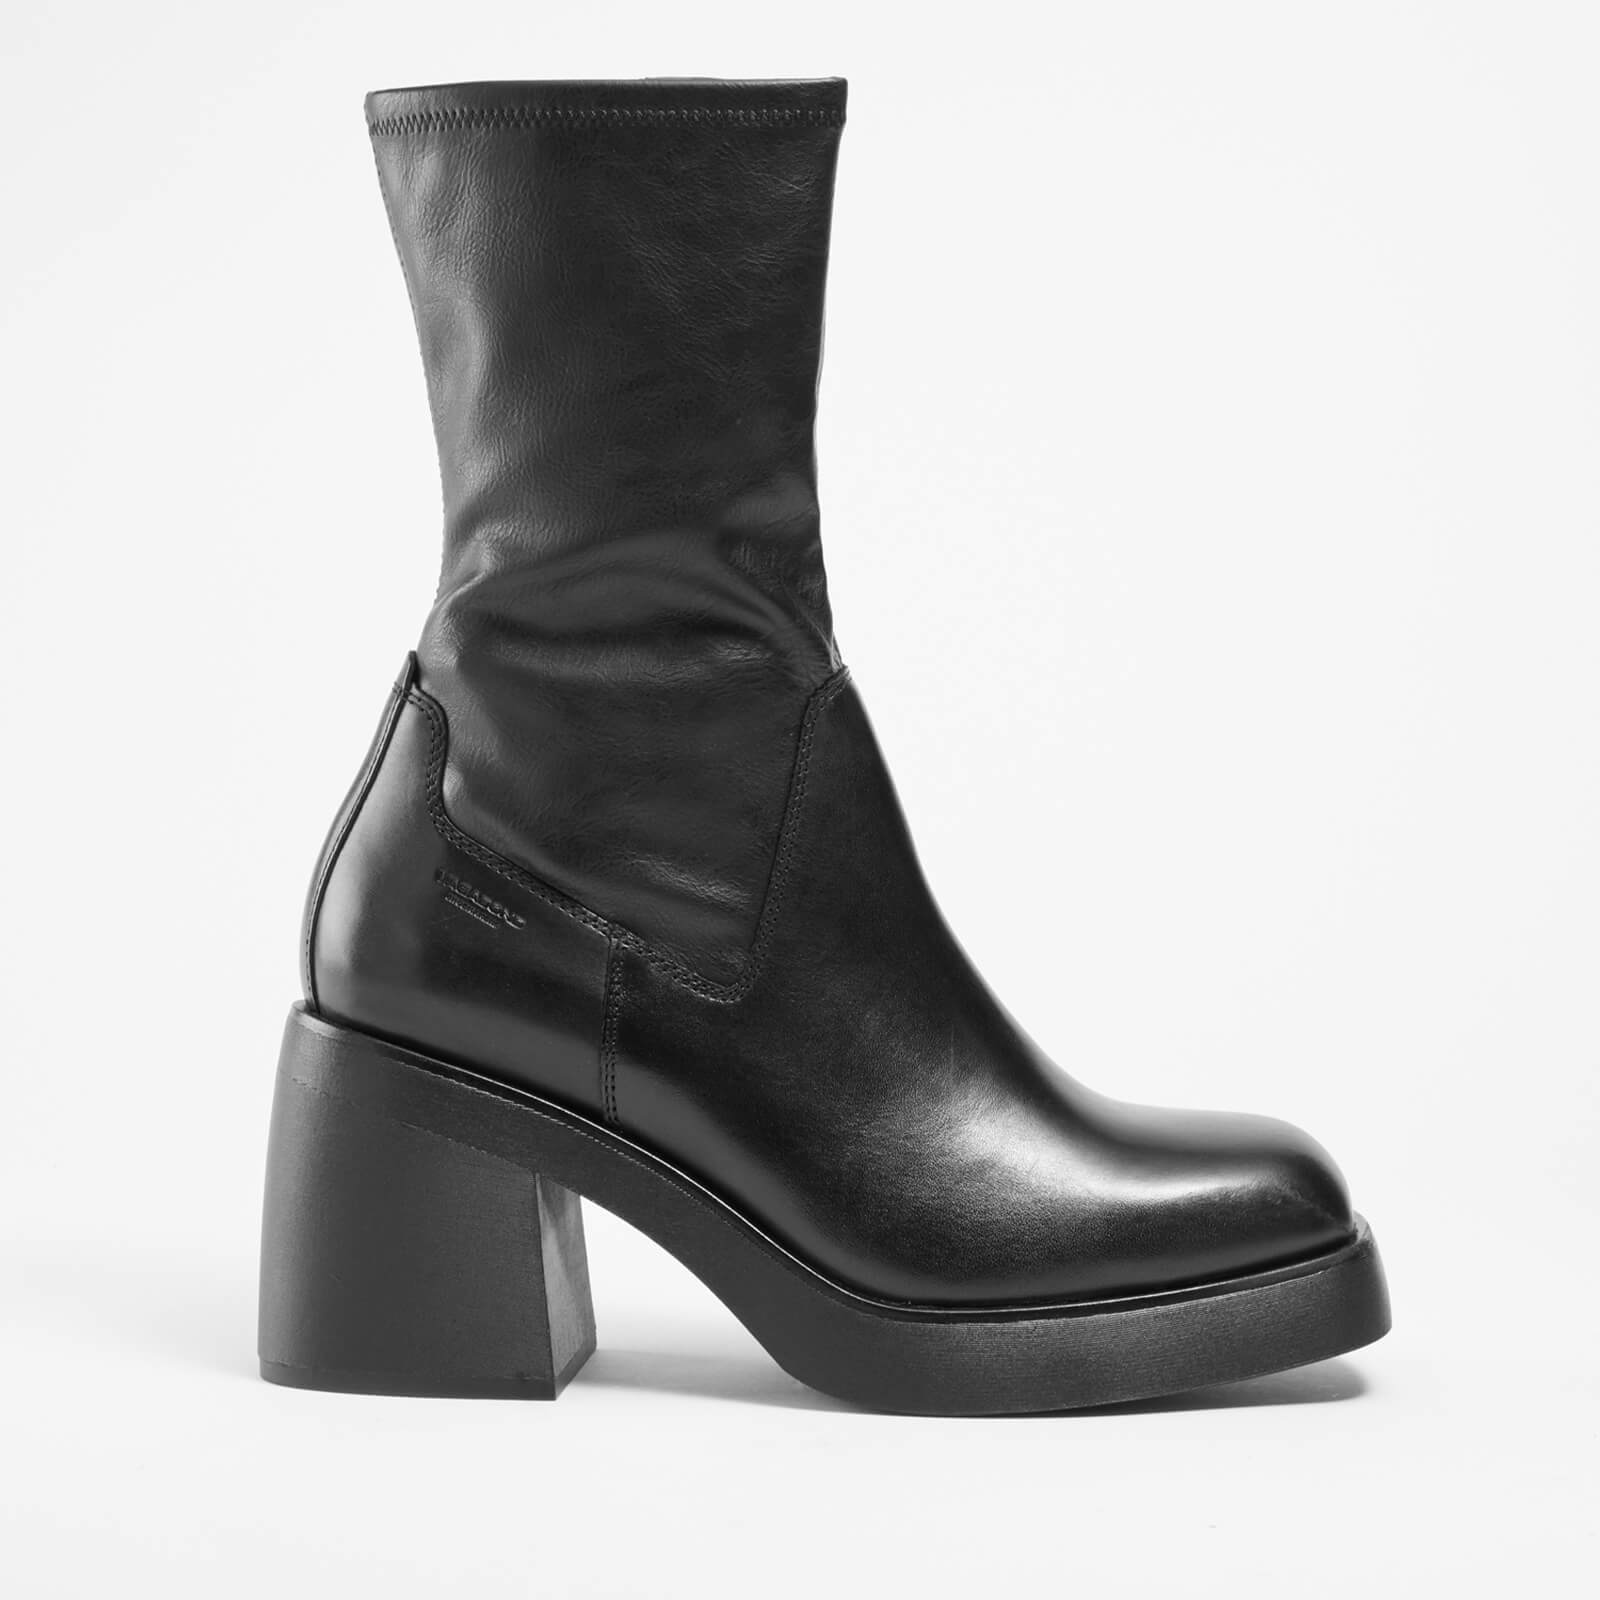 Vagabond Women's Brooke Leather Heeled Boots - UK 5